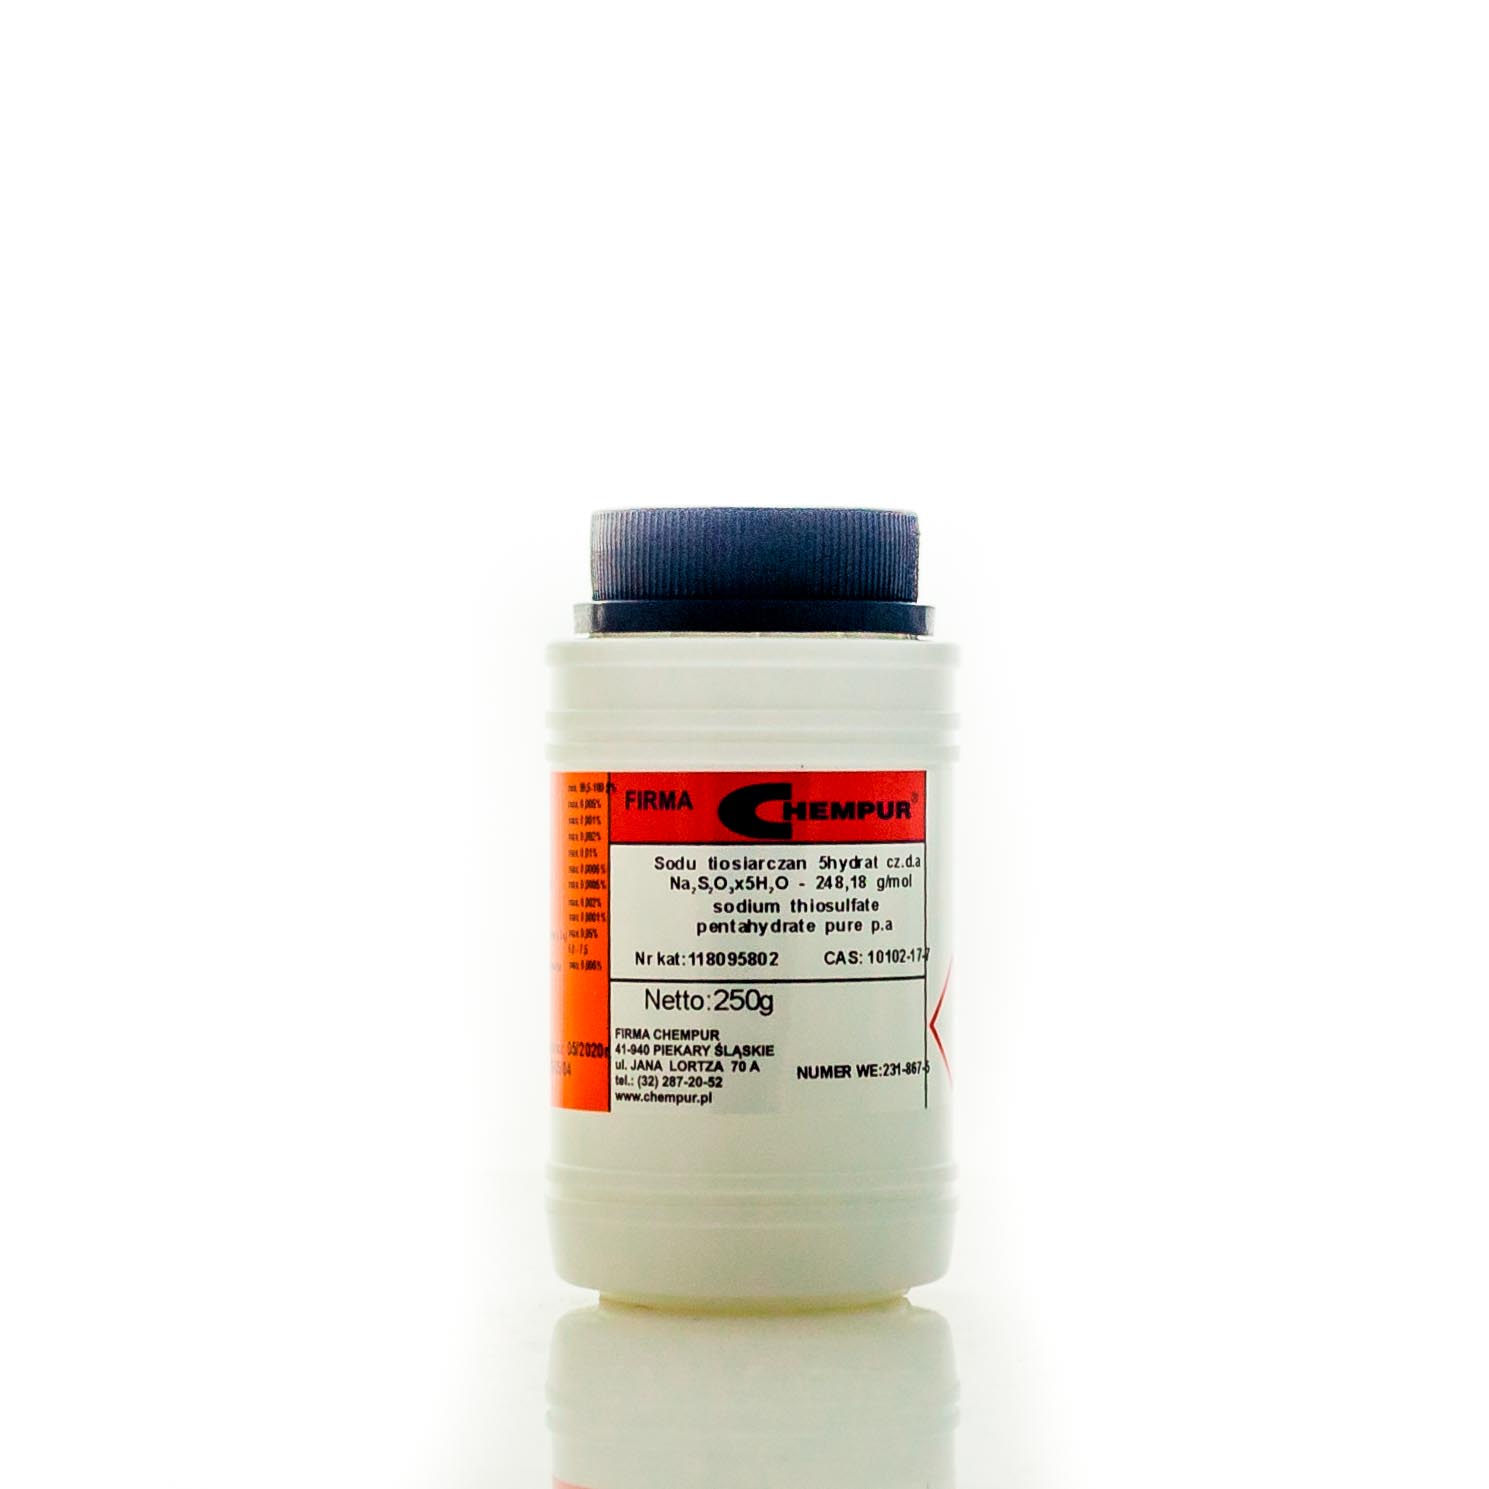 sodium thiosulfate pentahydrate pure p.a